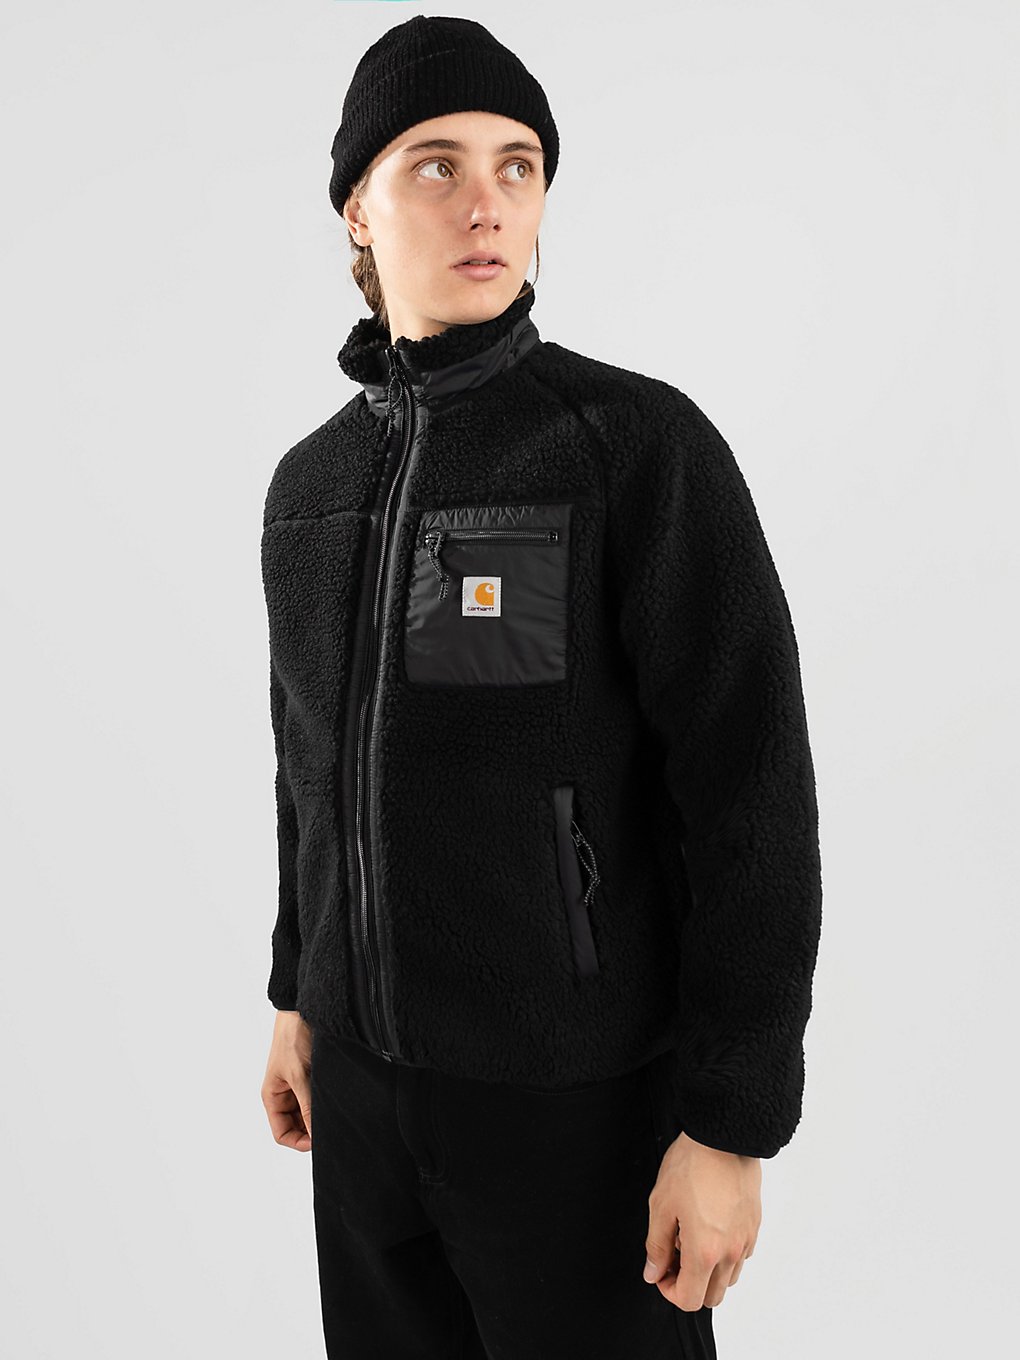 Carhartt WIP Prentis Liner Jacke black kaufen